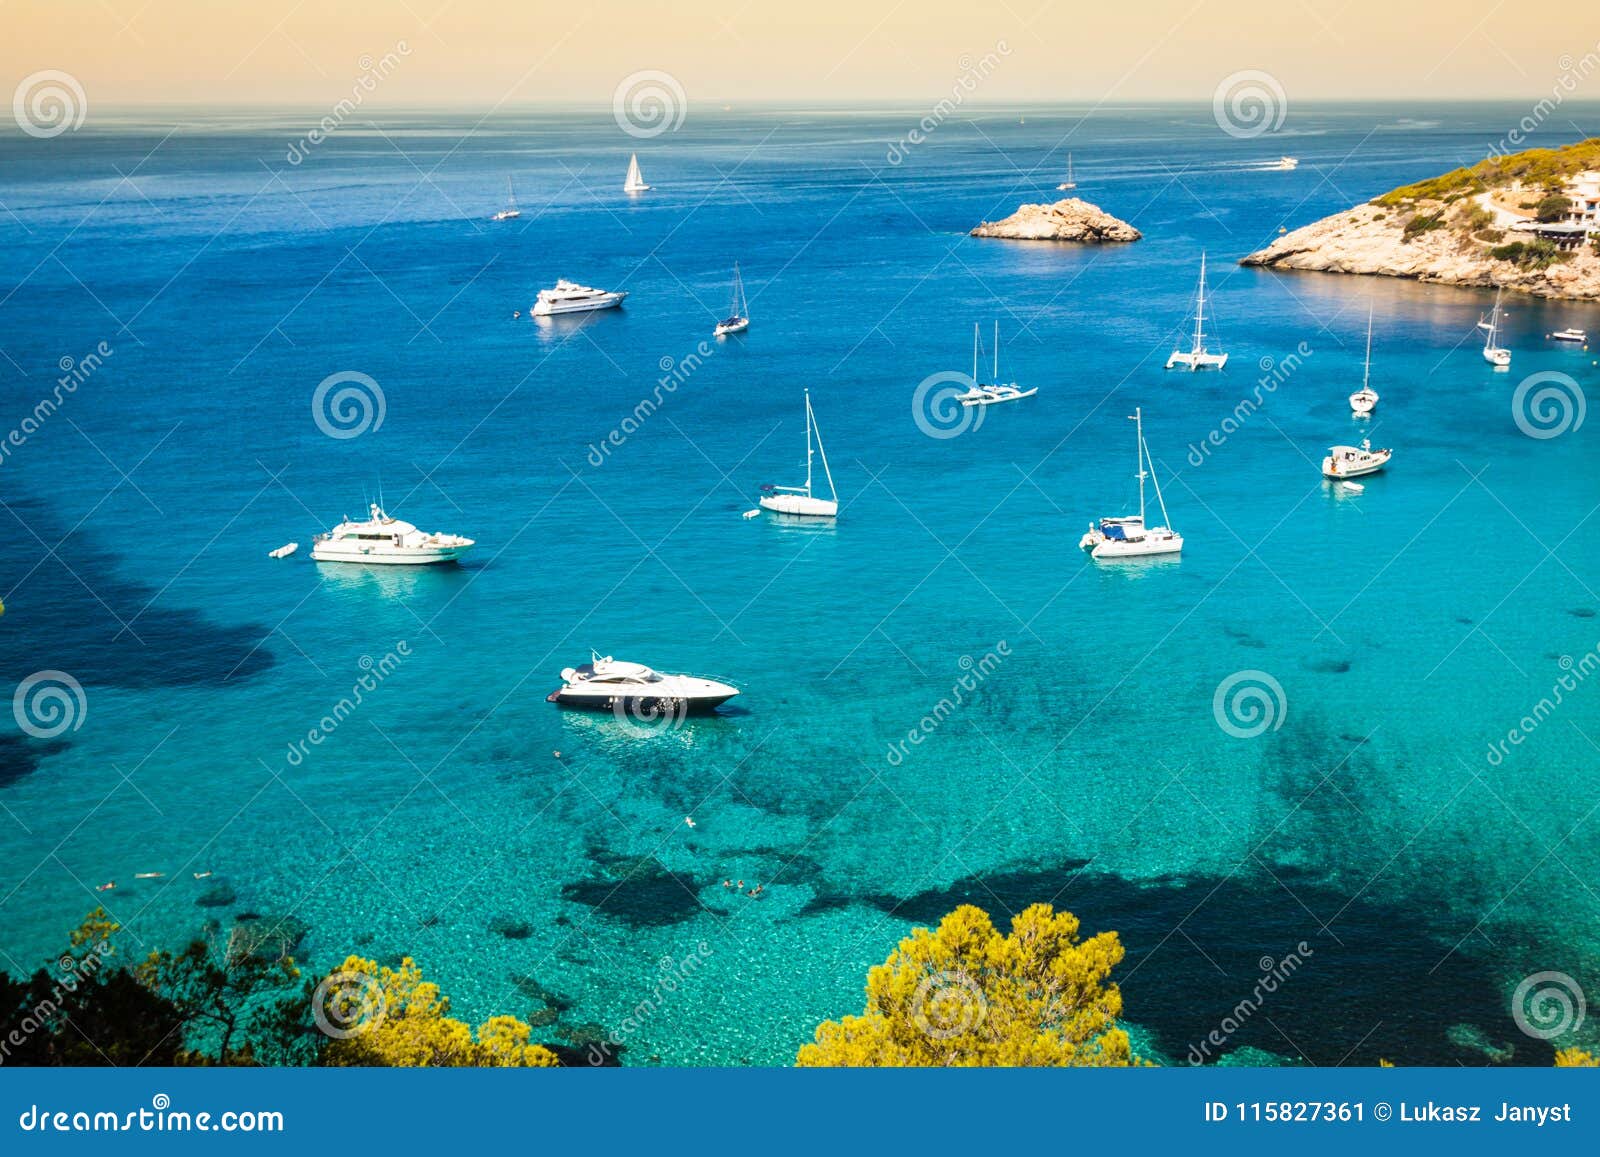 es vedra island of ibiza cala d hort in balearic islands